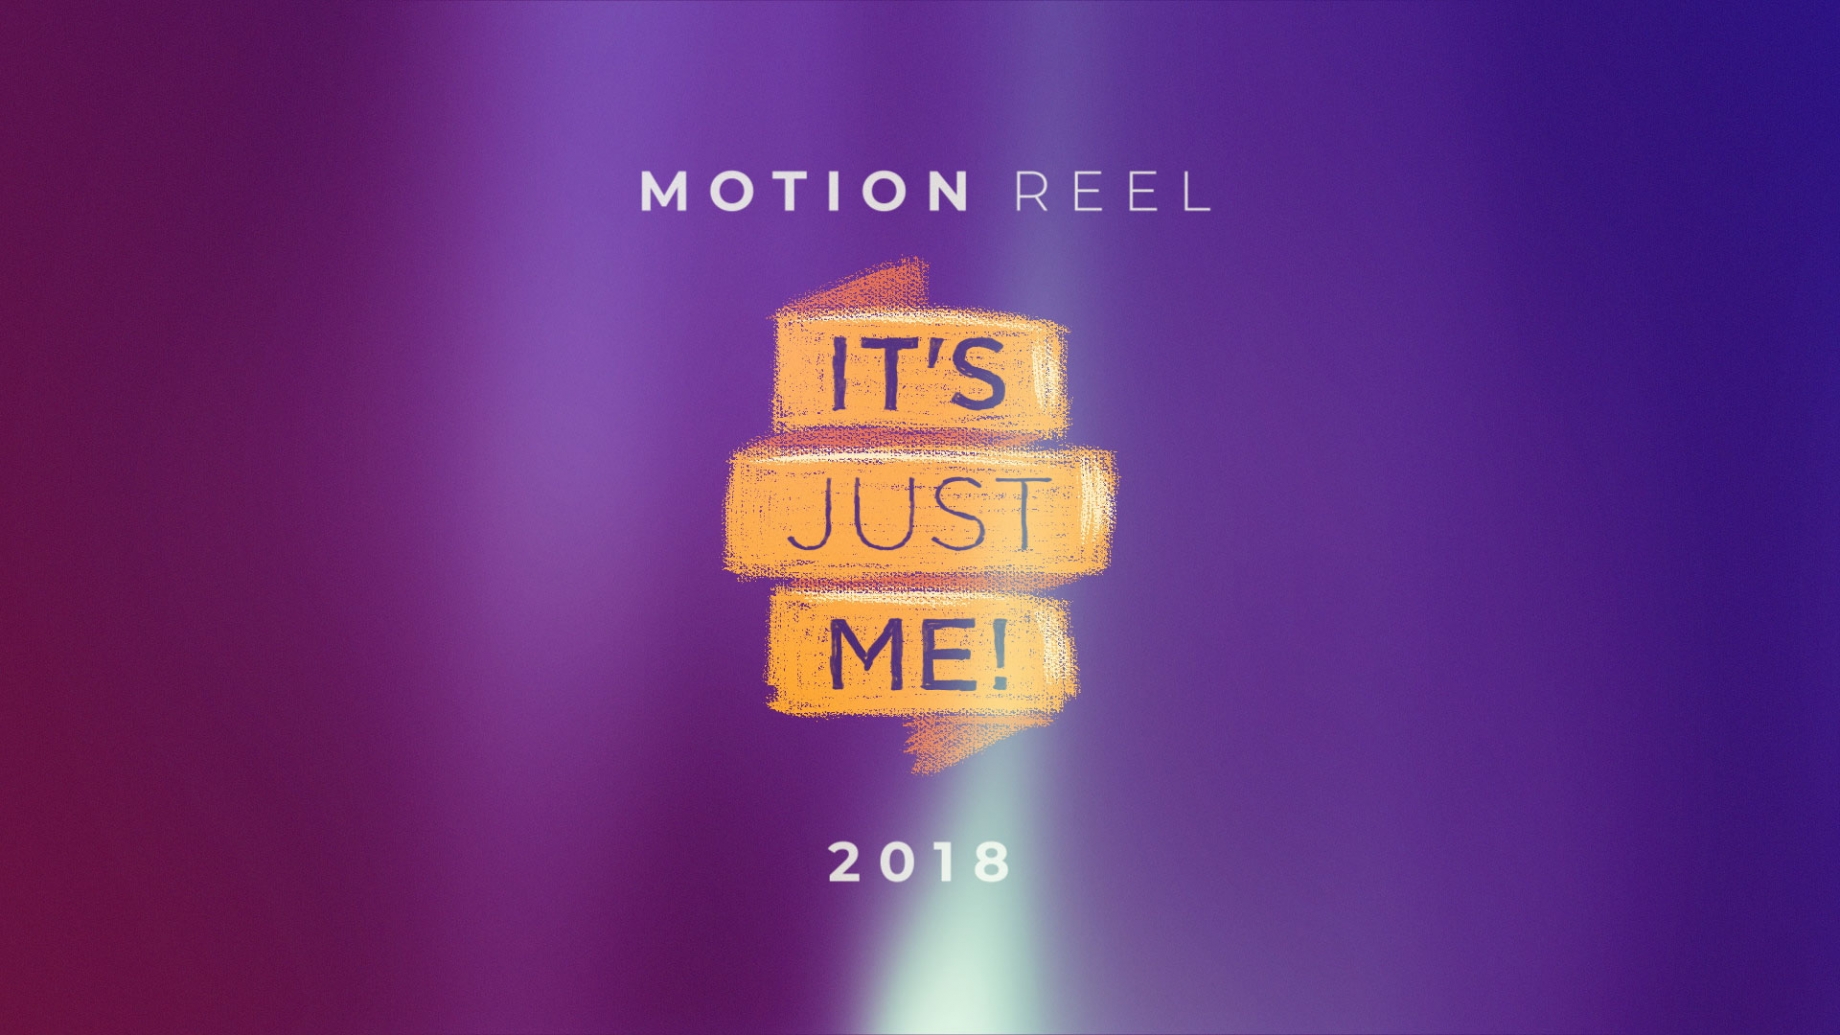 Motion reel 2018